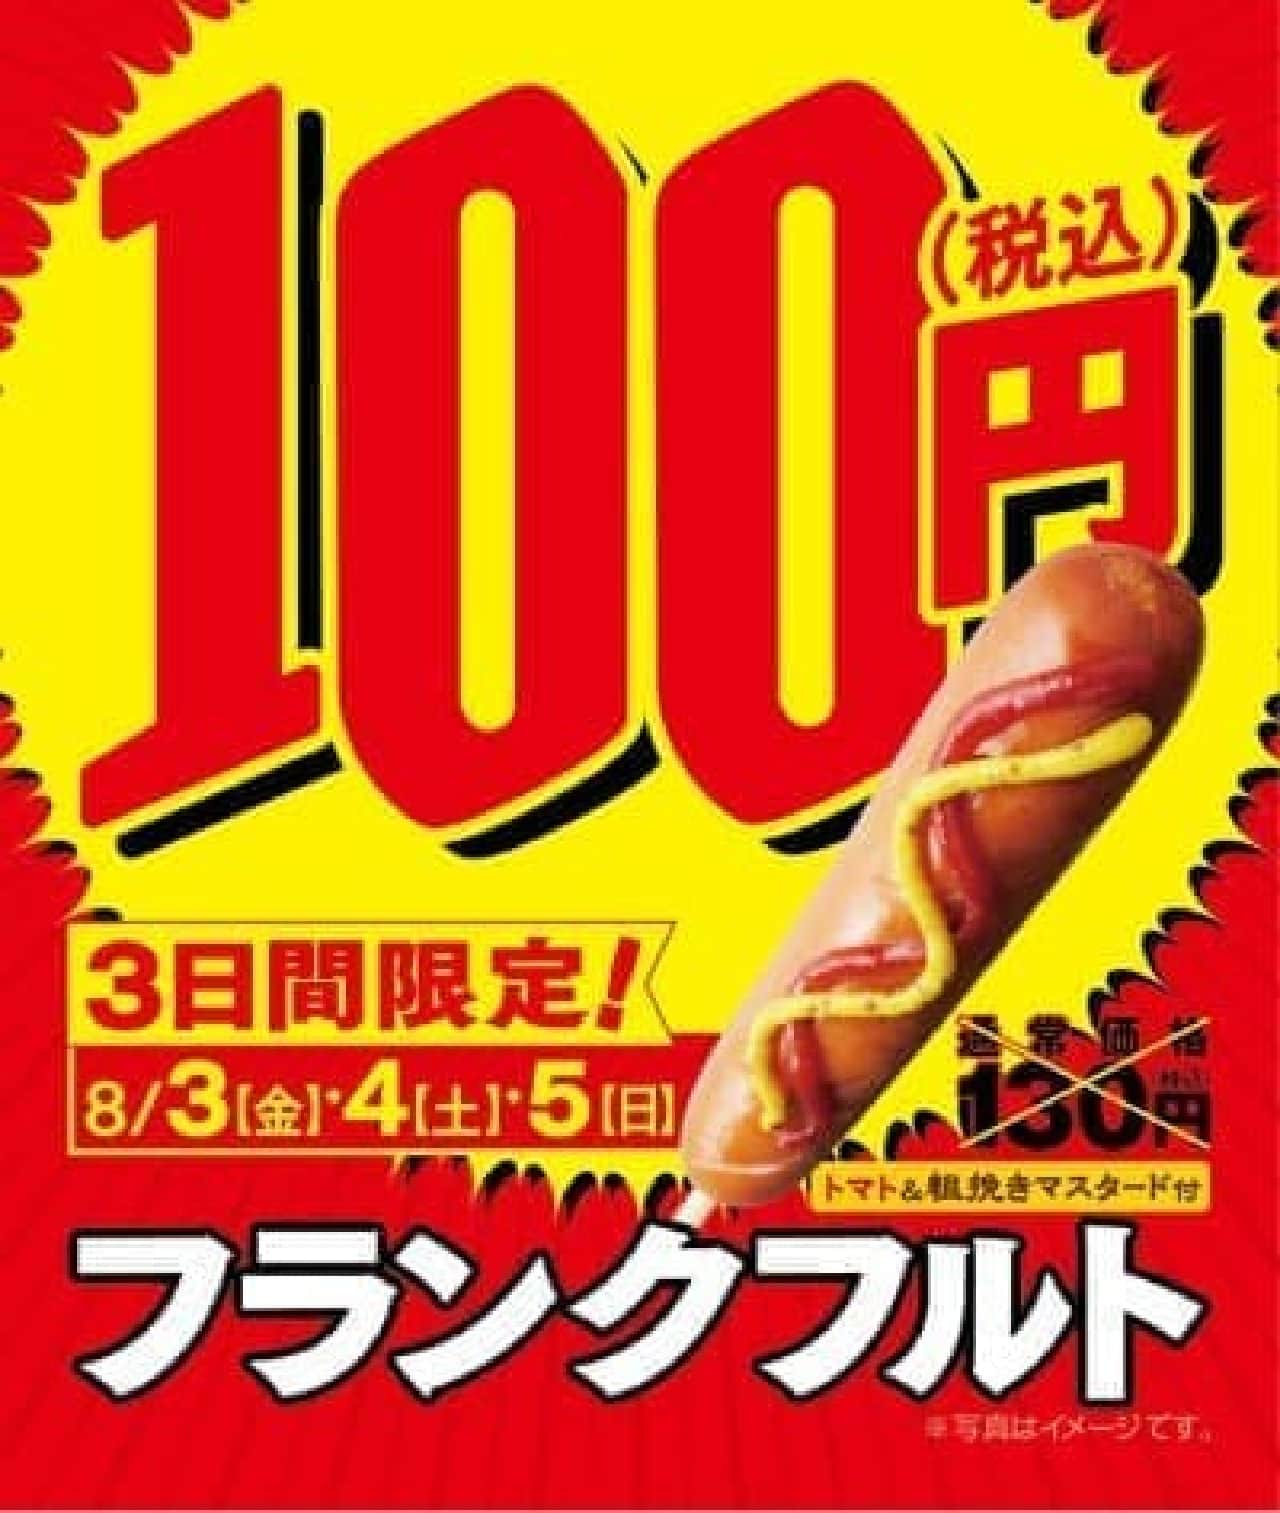 Ministop "5 popular rice balls 100 yen sale"